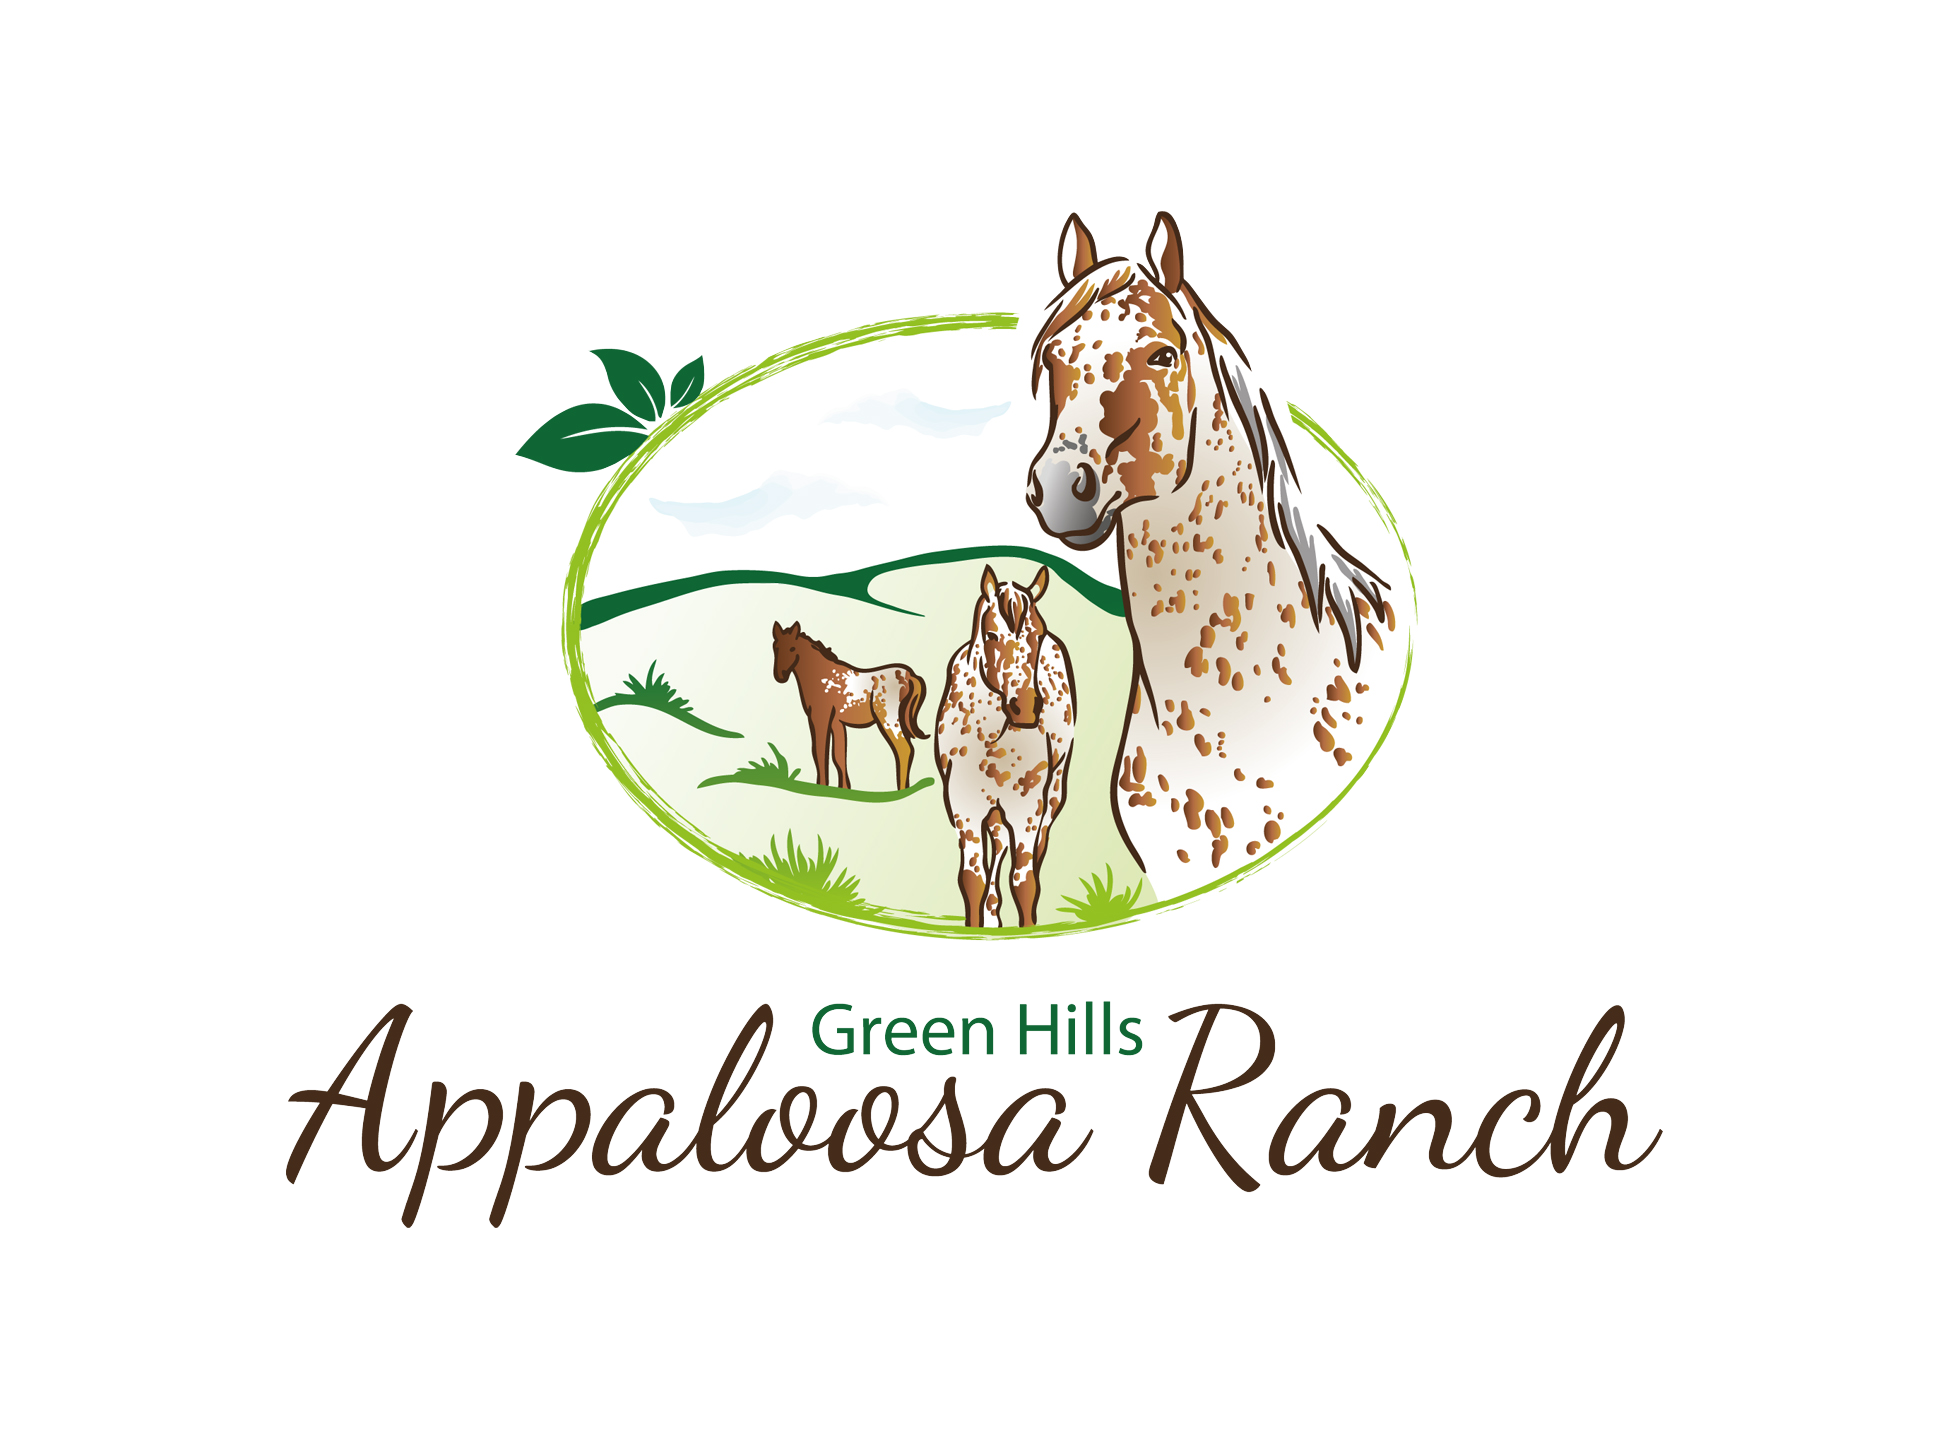 Green Hills Appaloosa Ranch